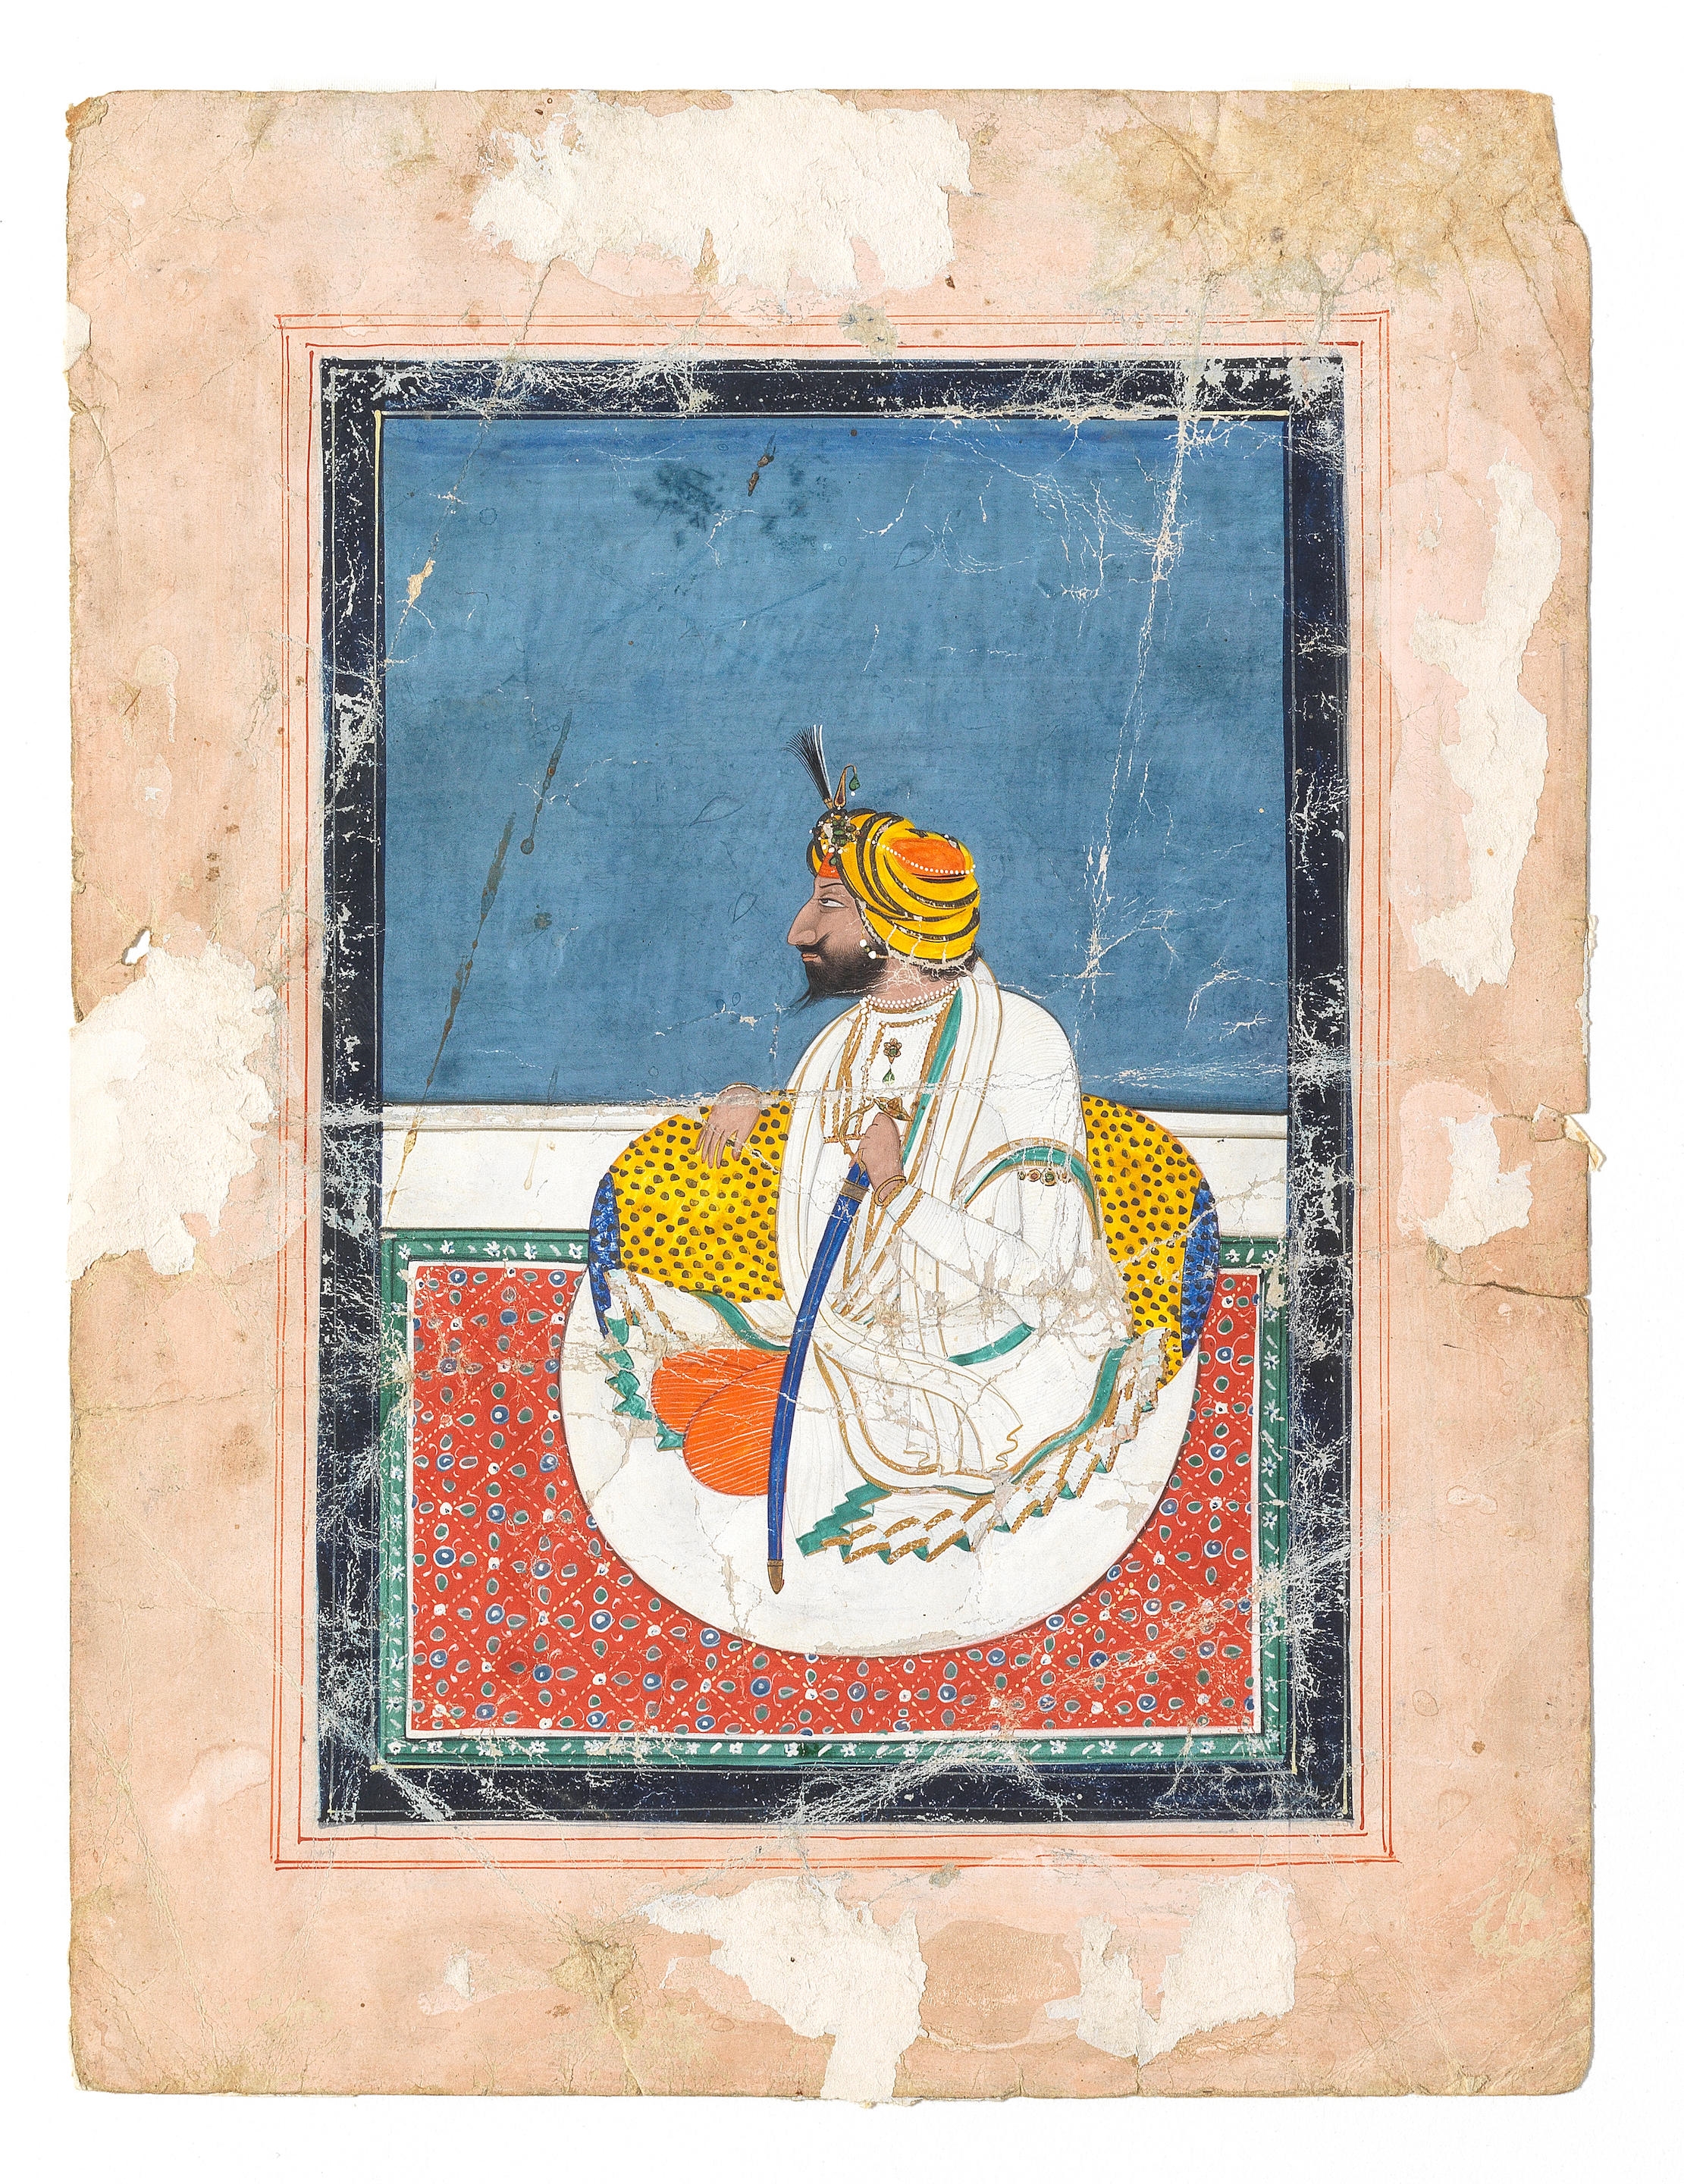 Maharajah Gulab Singh (1792-1857) seated holding a sword against a bolster on a terrace